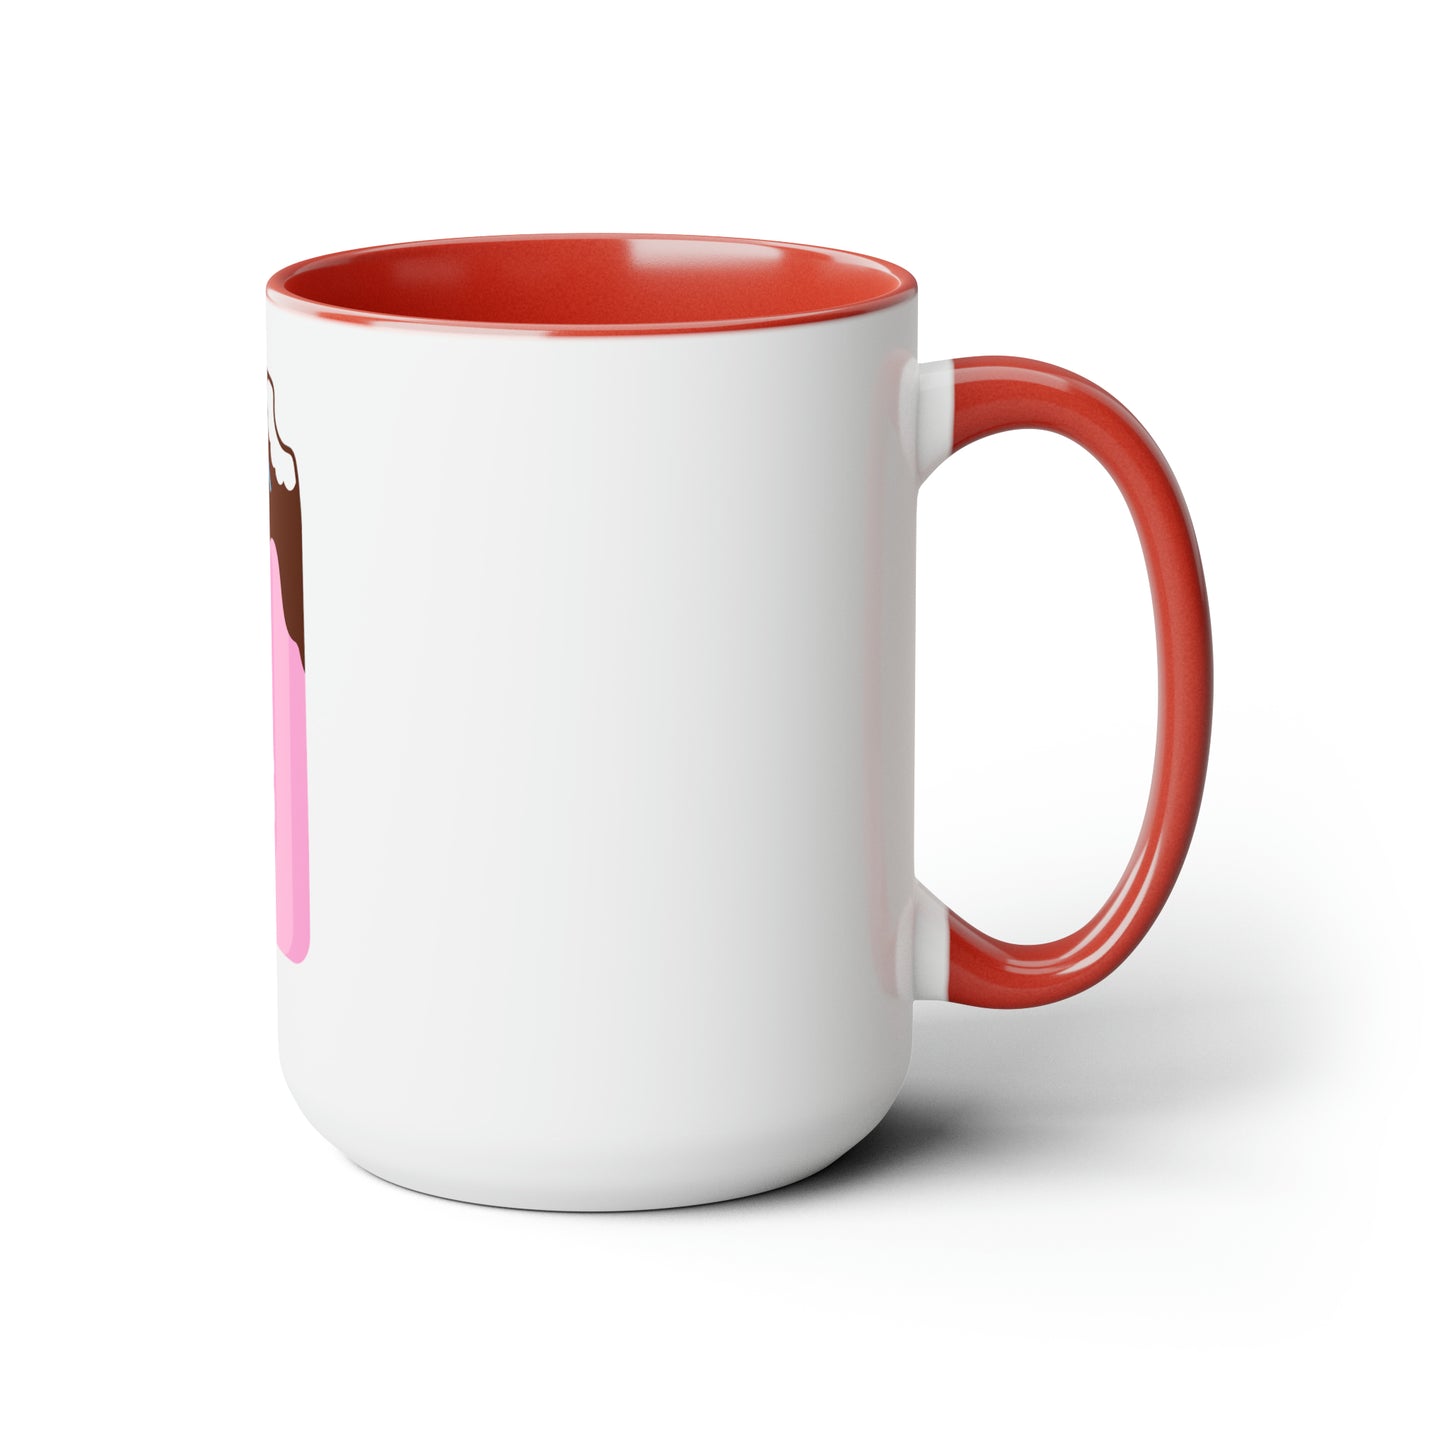 🍦 Choco-Top Pink Ice Cream Mug 🍦